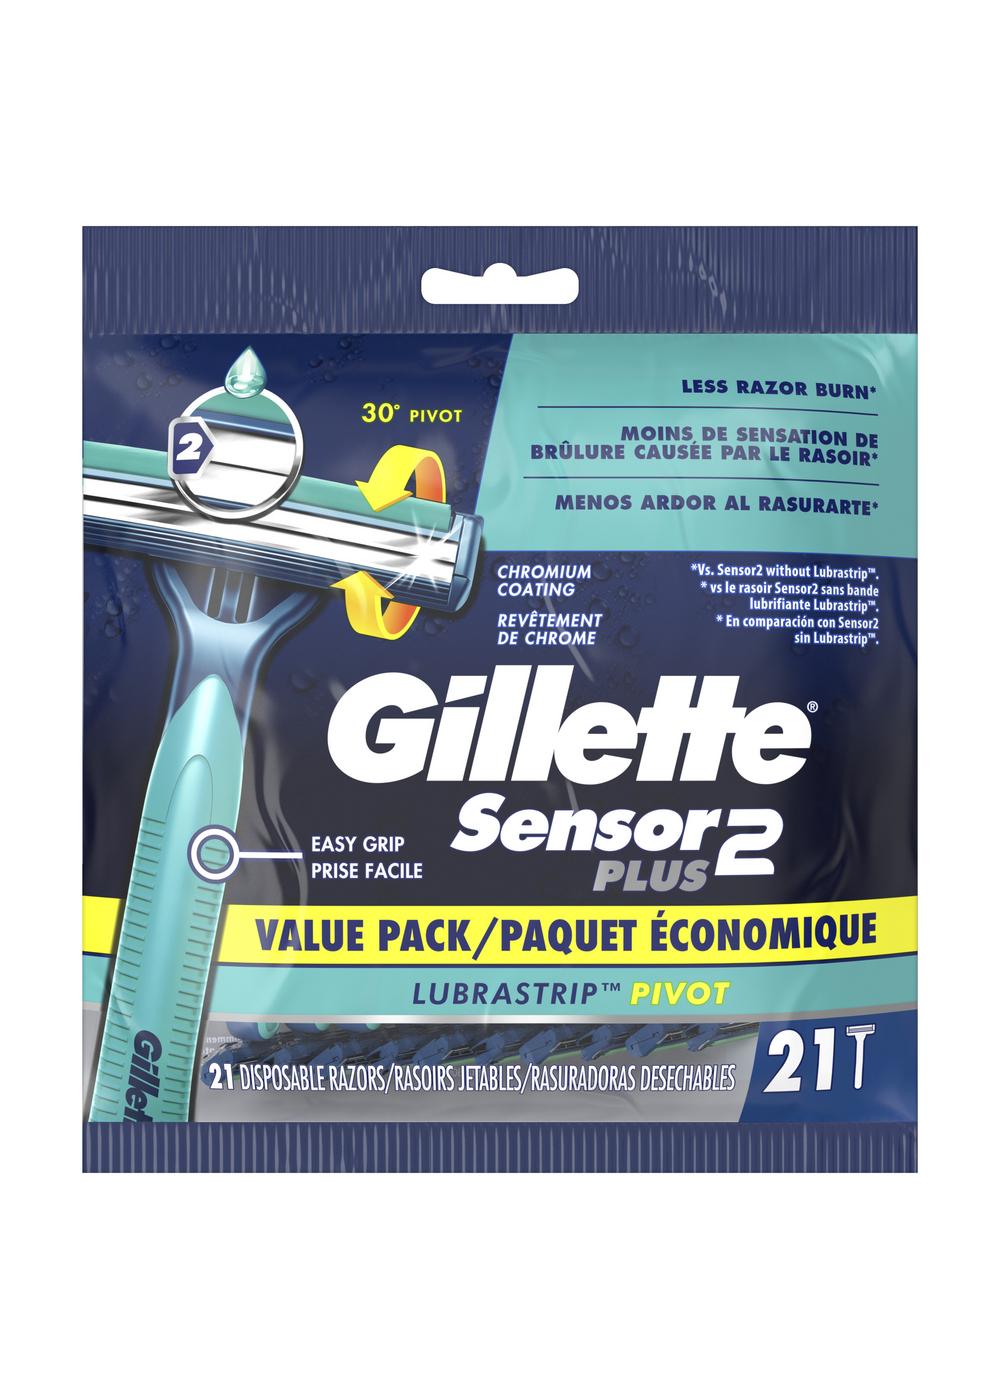 Gillette Sensor 2 Plus Disposable Razors; image 1 of 2